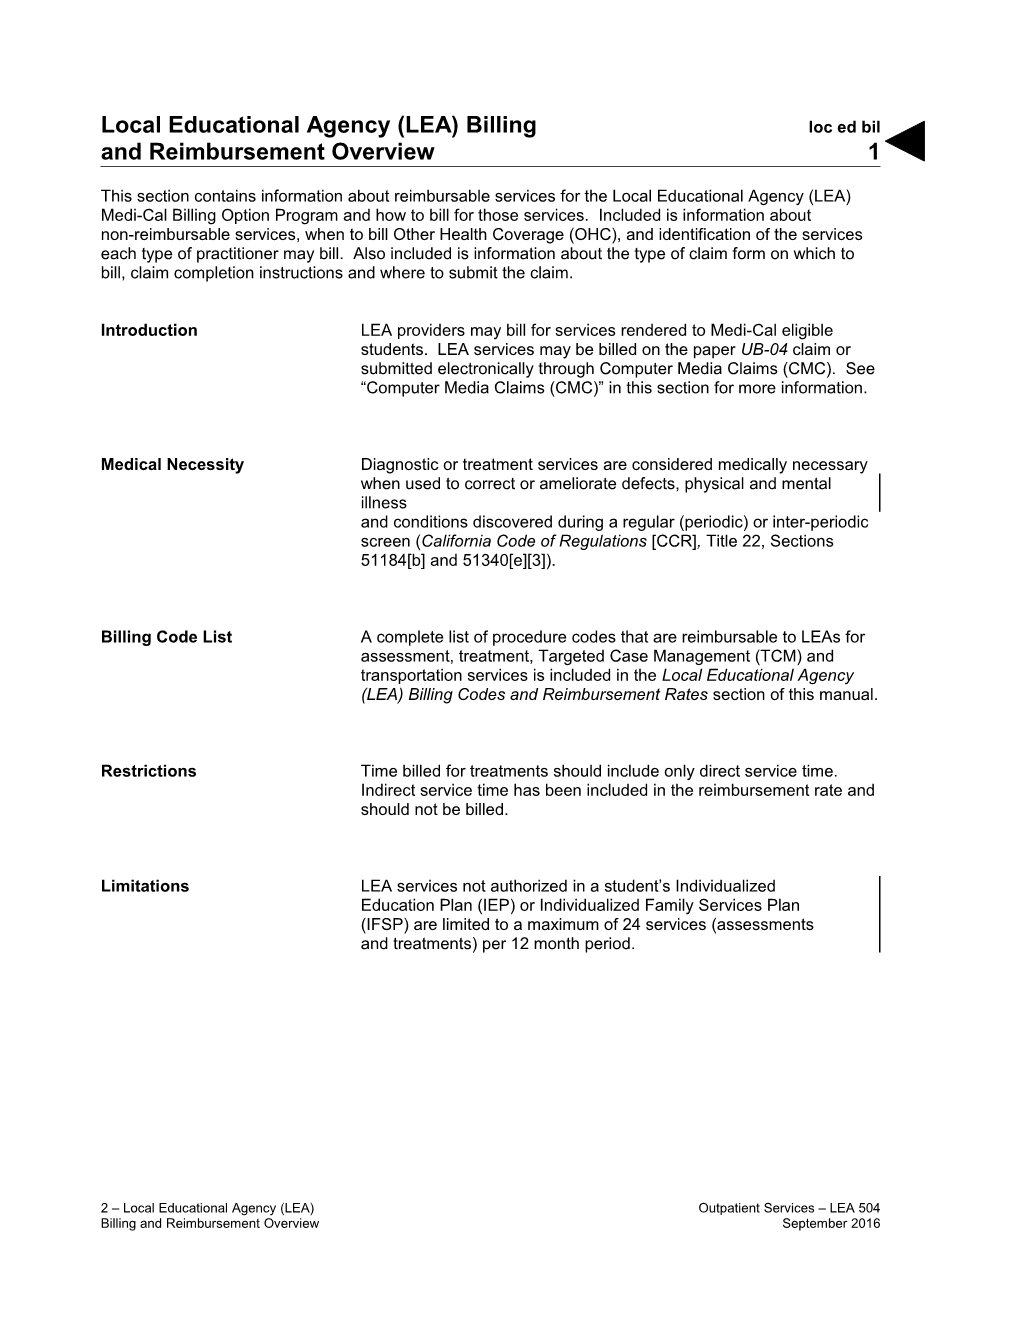 Local Educational Agency (LEA) Billing and Reimbursement Overview (Loc Ed Bil)